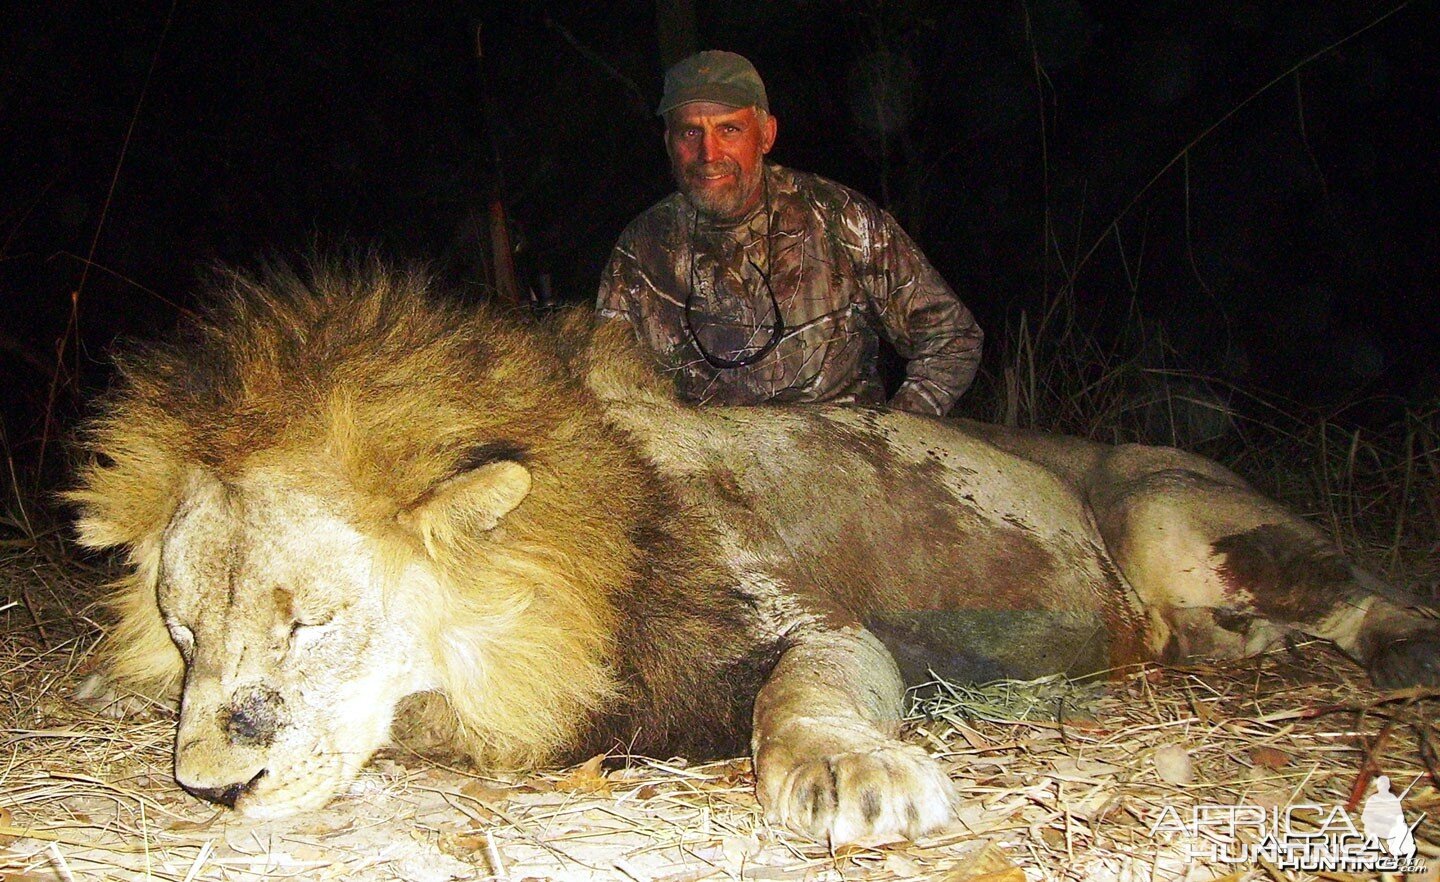 Big Lion hunted in Zambia with Prohunt Zambia